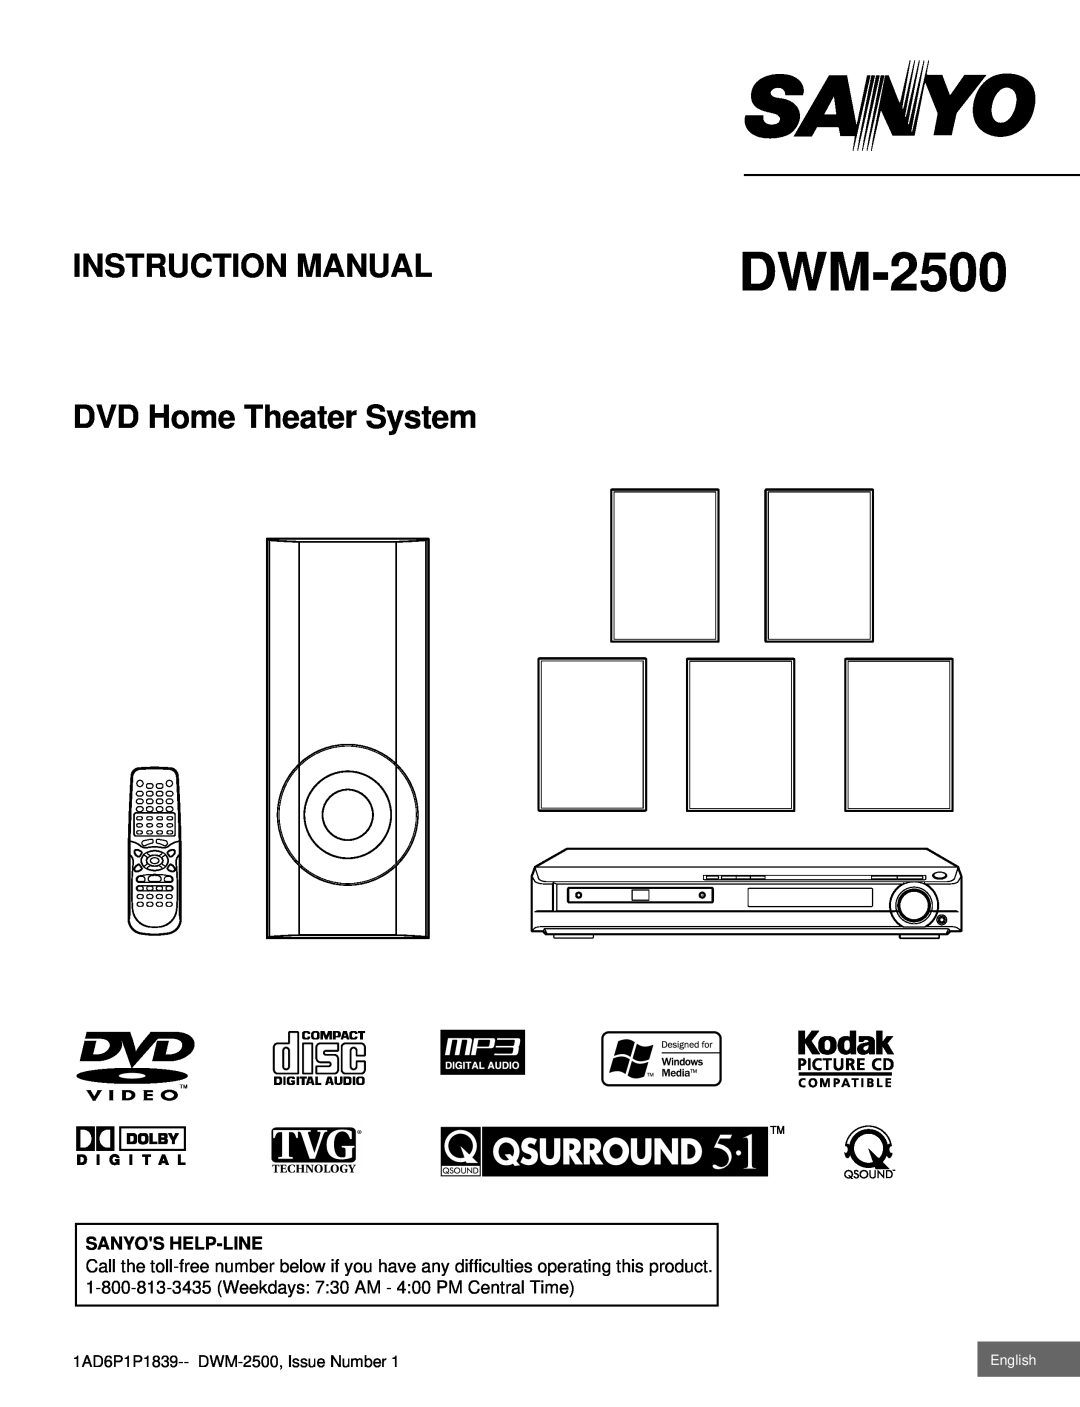 Sanyo DWM-2500 instruction manual Instruction Manual, DVD Home Theater System, English 